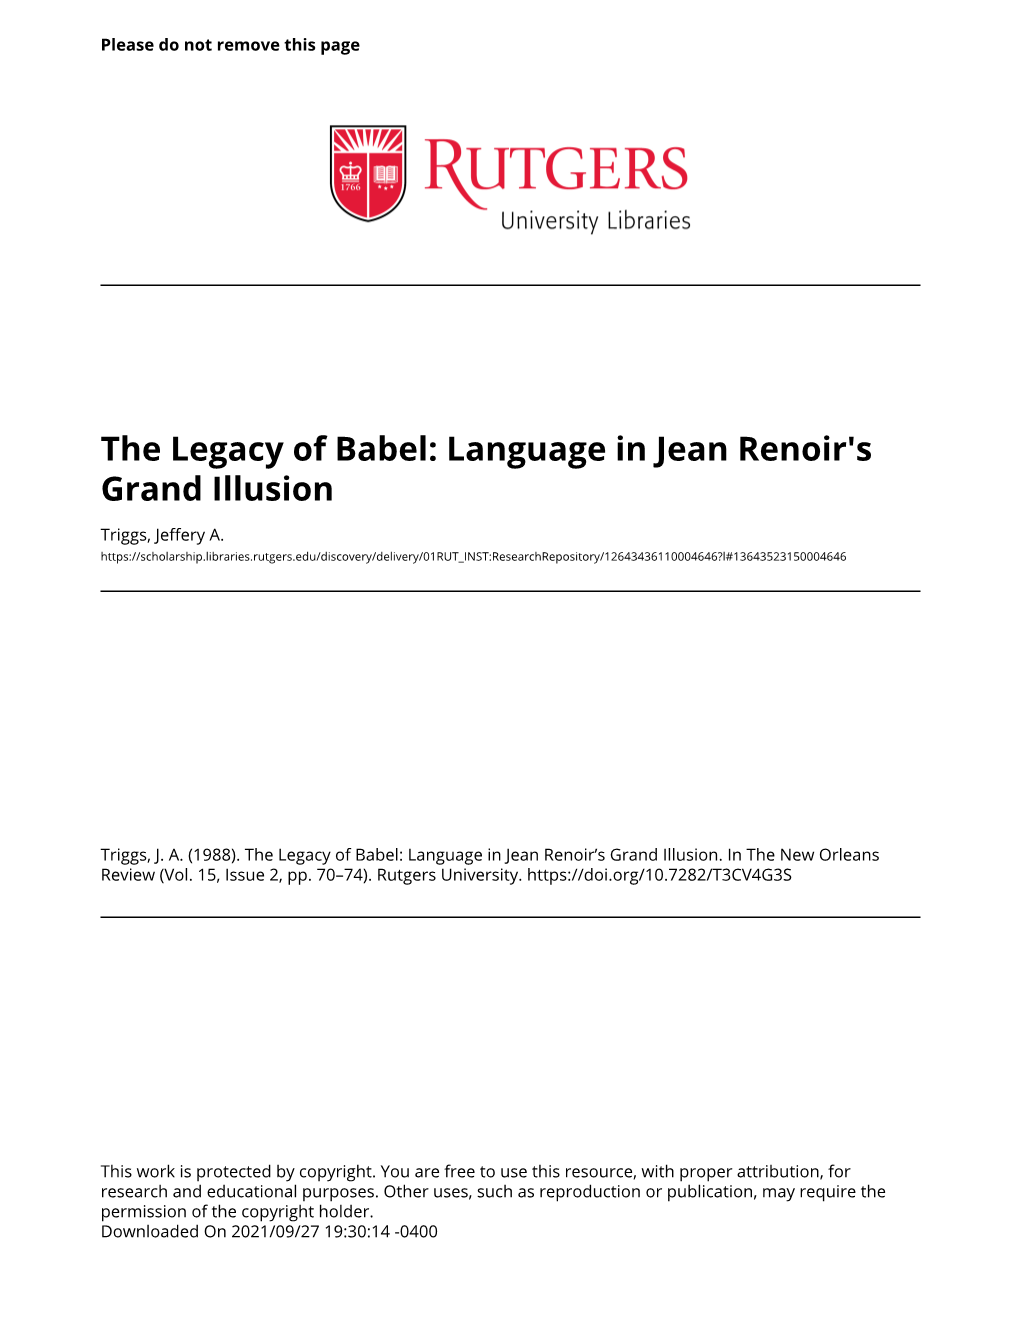 Language in Jean Renoir's Grand Illusion